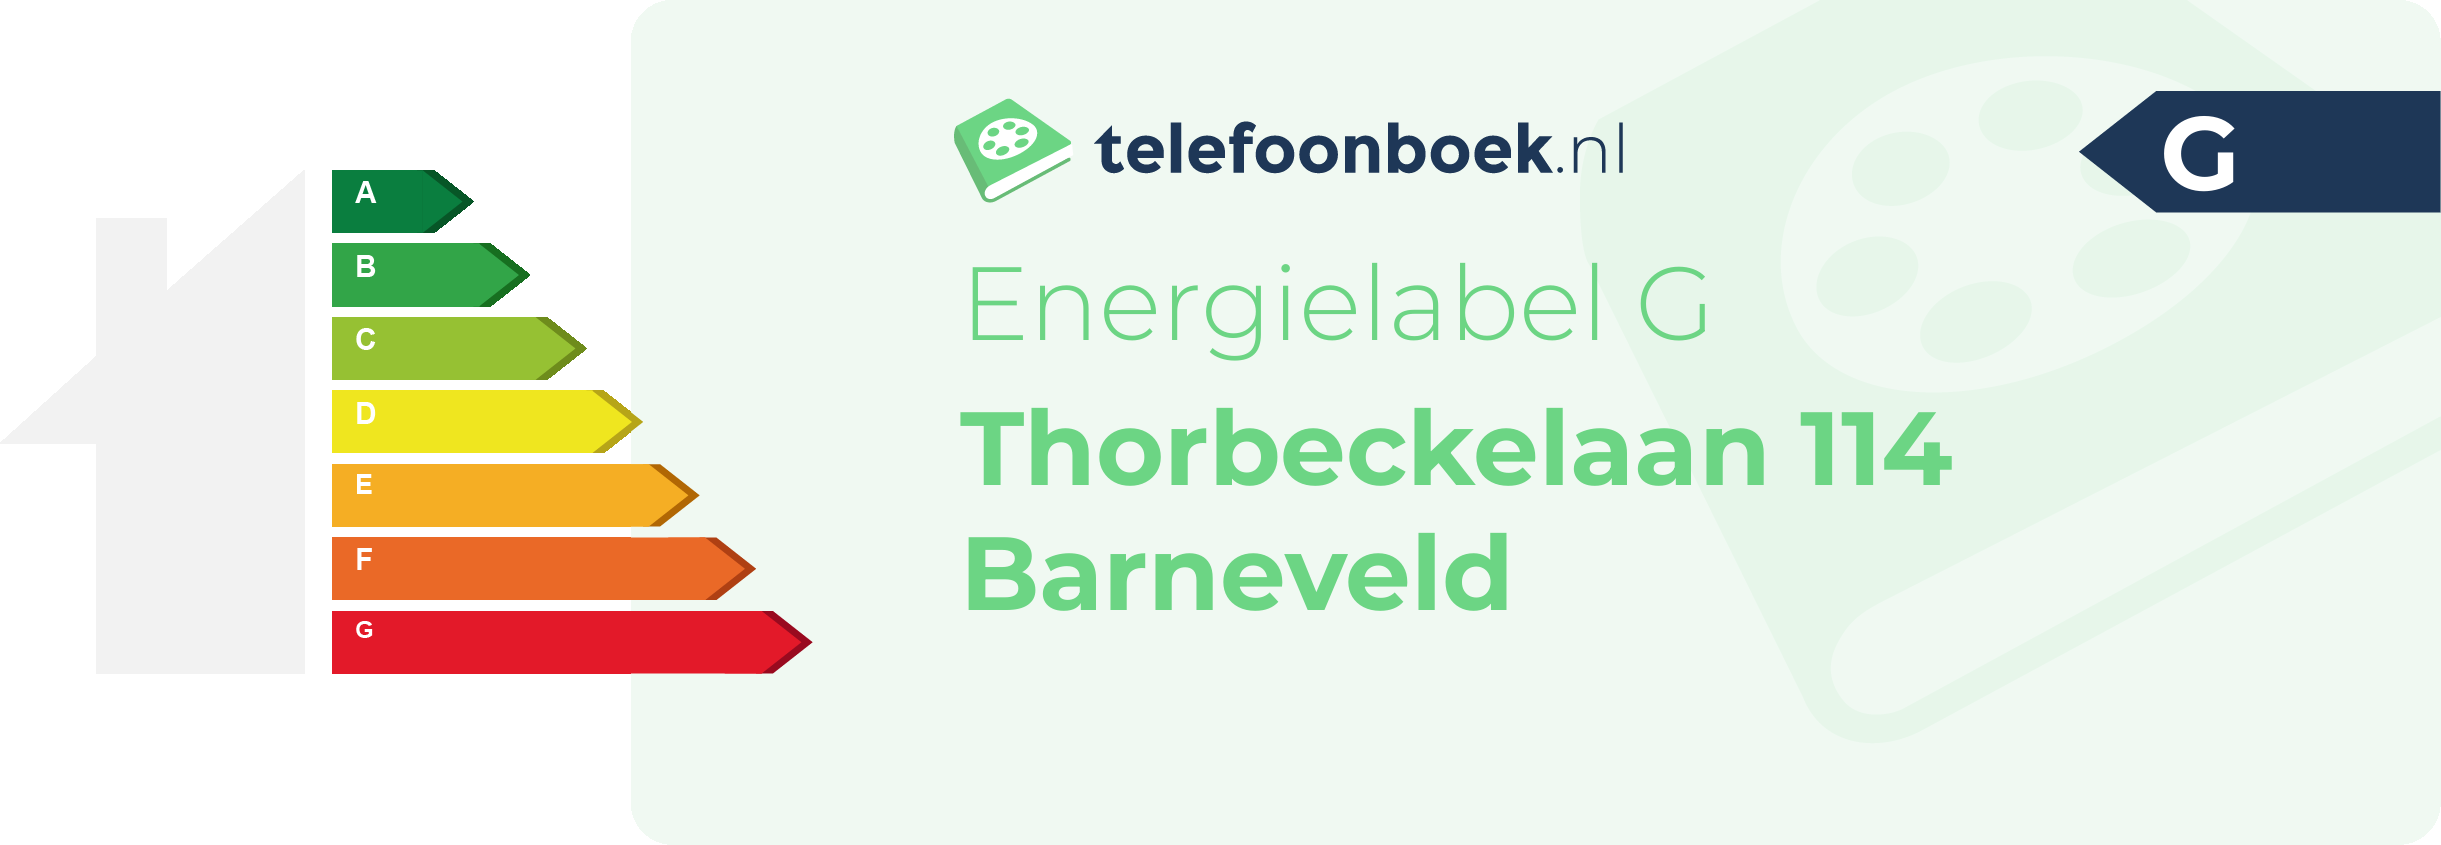 Energielabel Thorbeckelaan 114 Barneveld